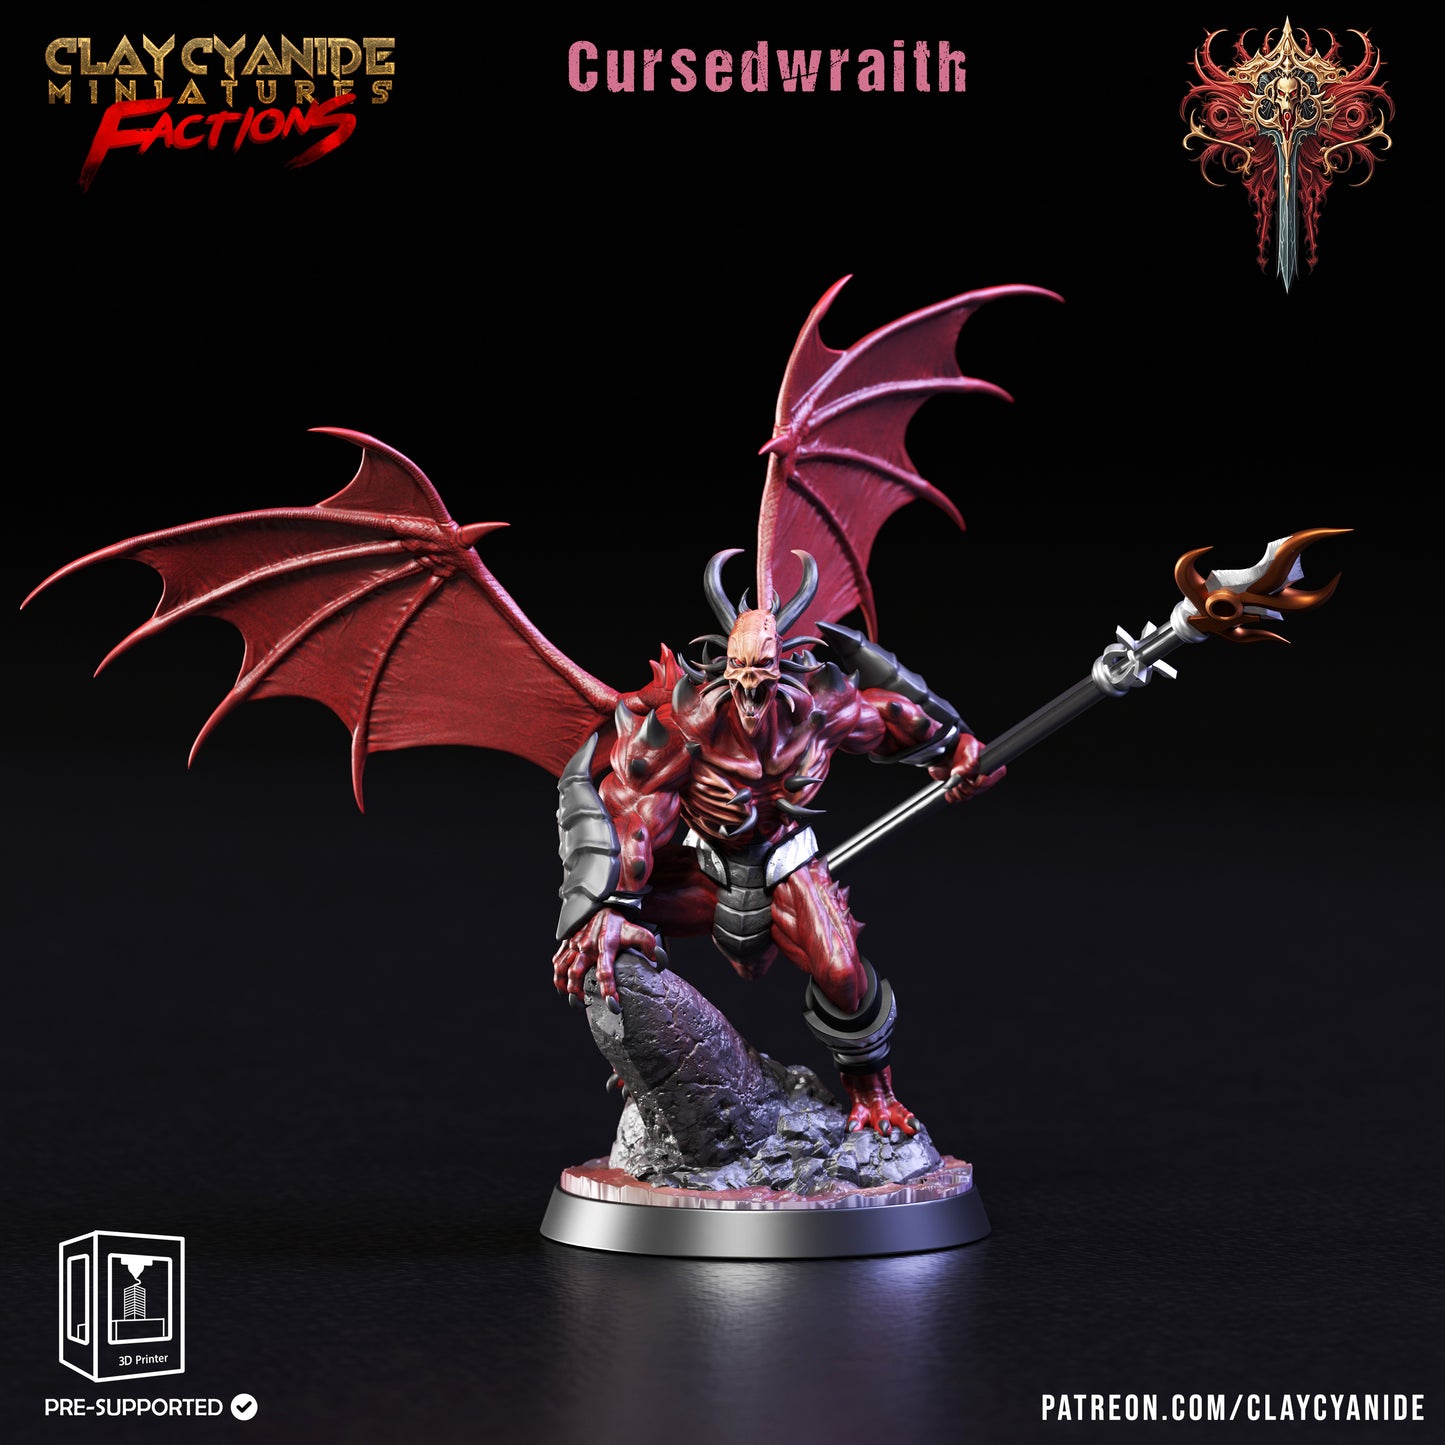 Cursedwraith